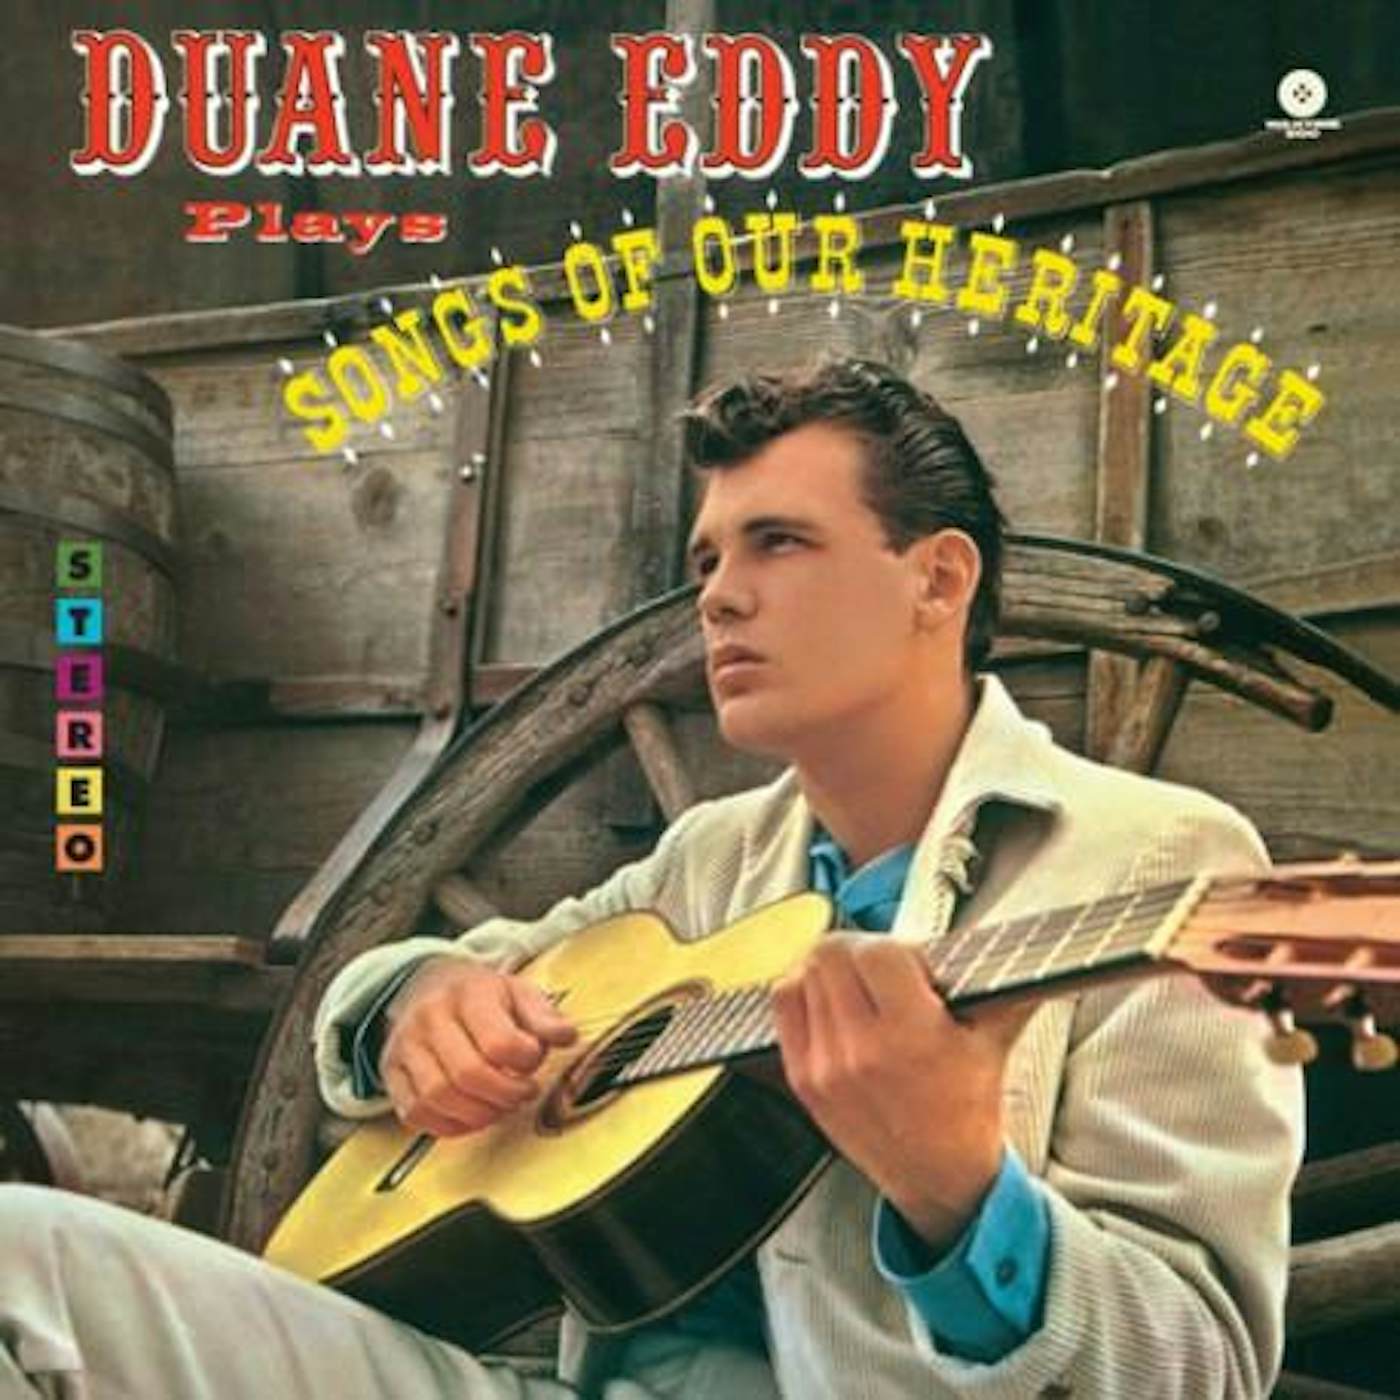 Eddy Duane SONGS OF OUR HERITAGE (2 BONUS TRACKS/LIMITED/180G/DMM) Vinyl Record